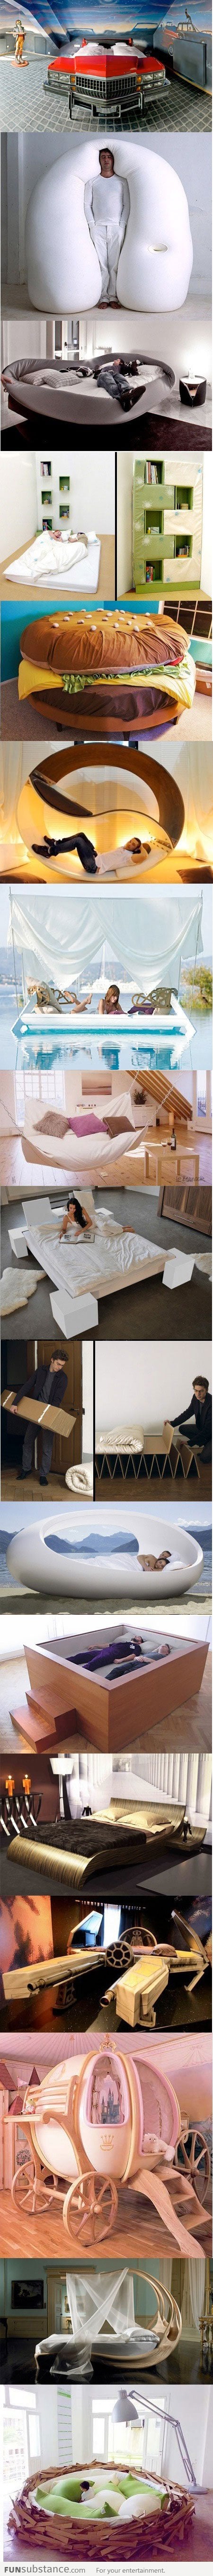 17 Creative Bed Designs